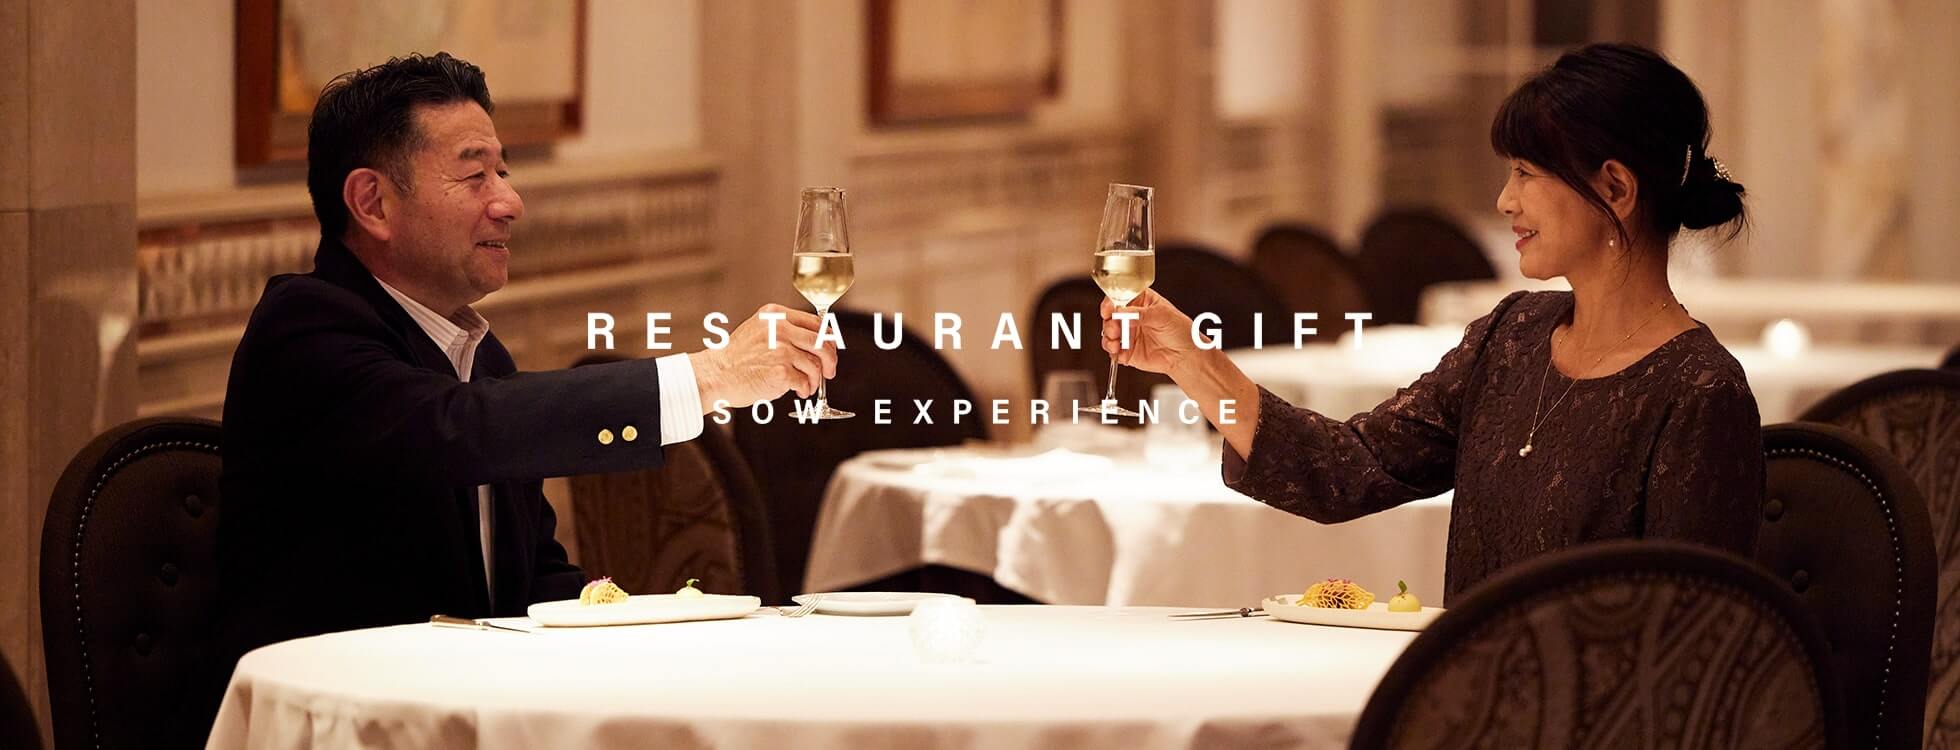 restaurant_gift_silver